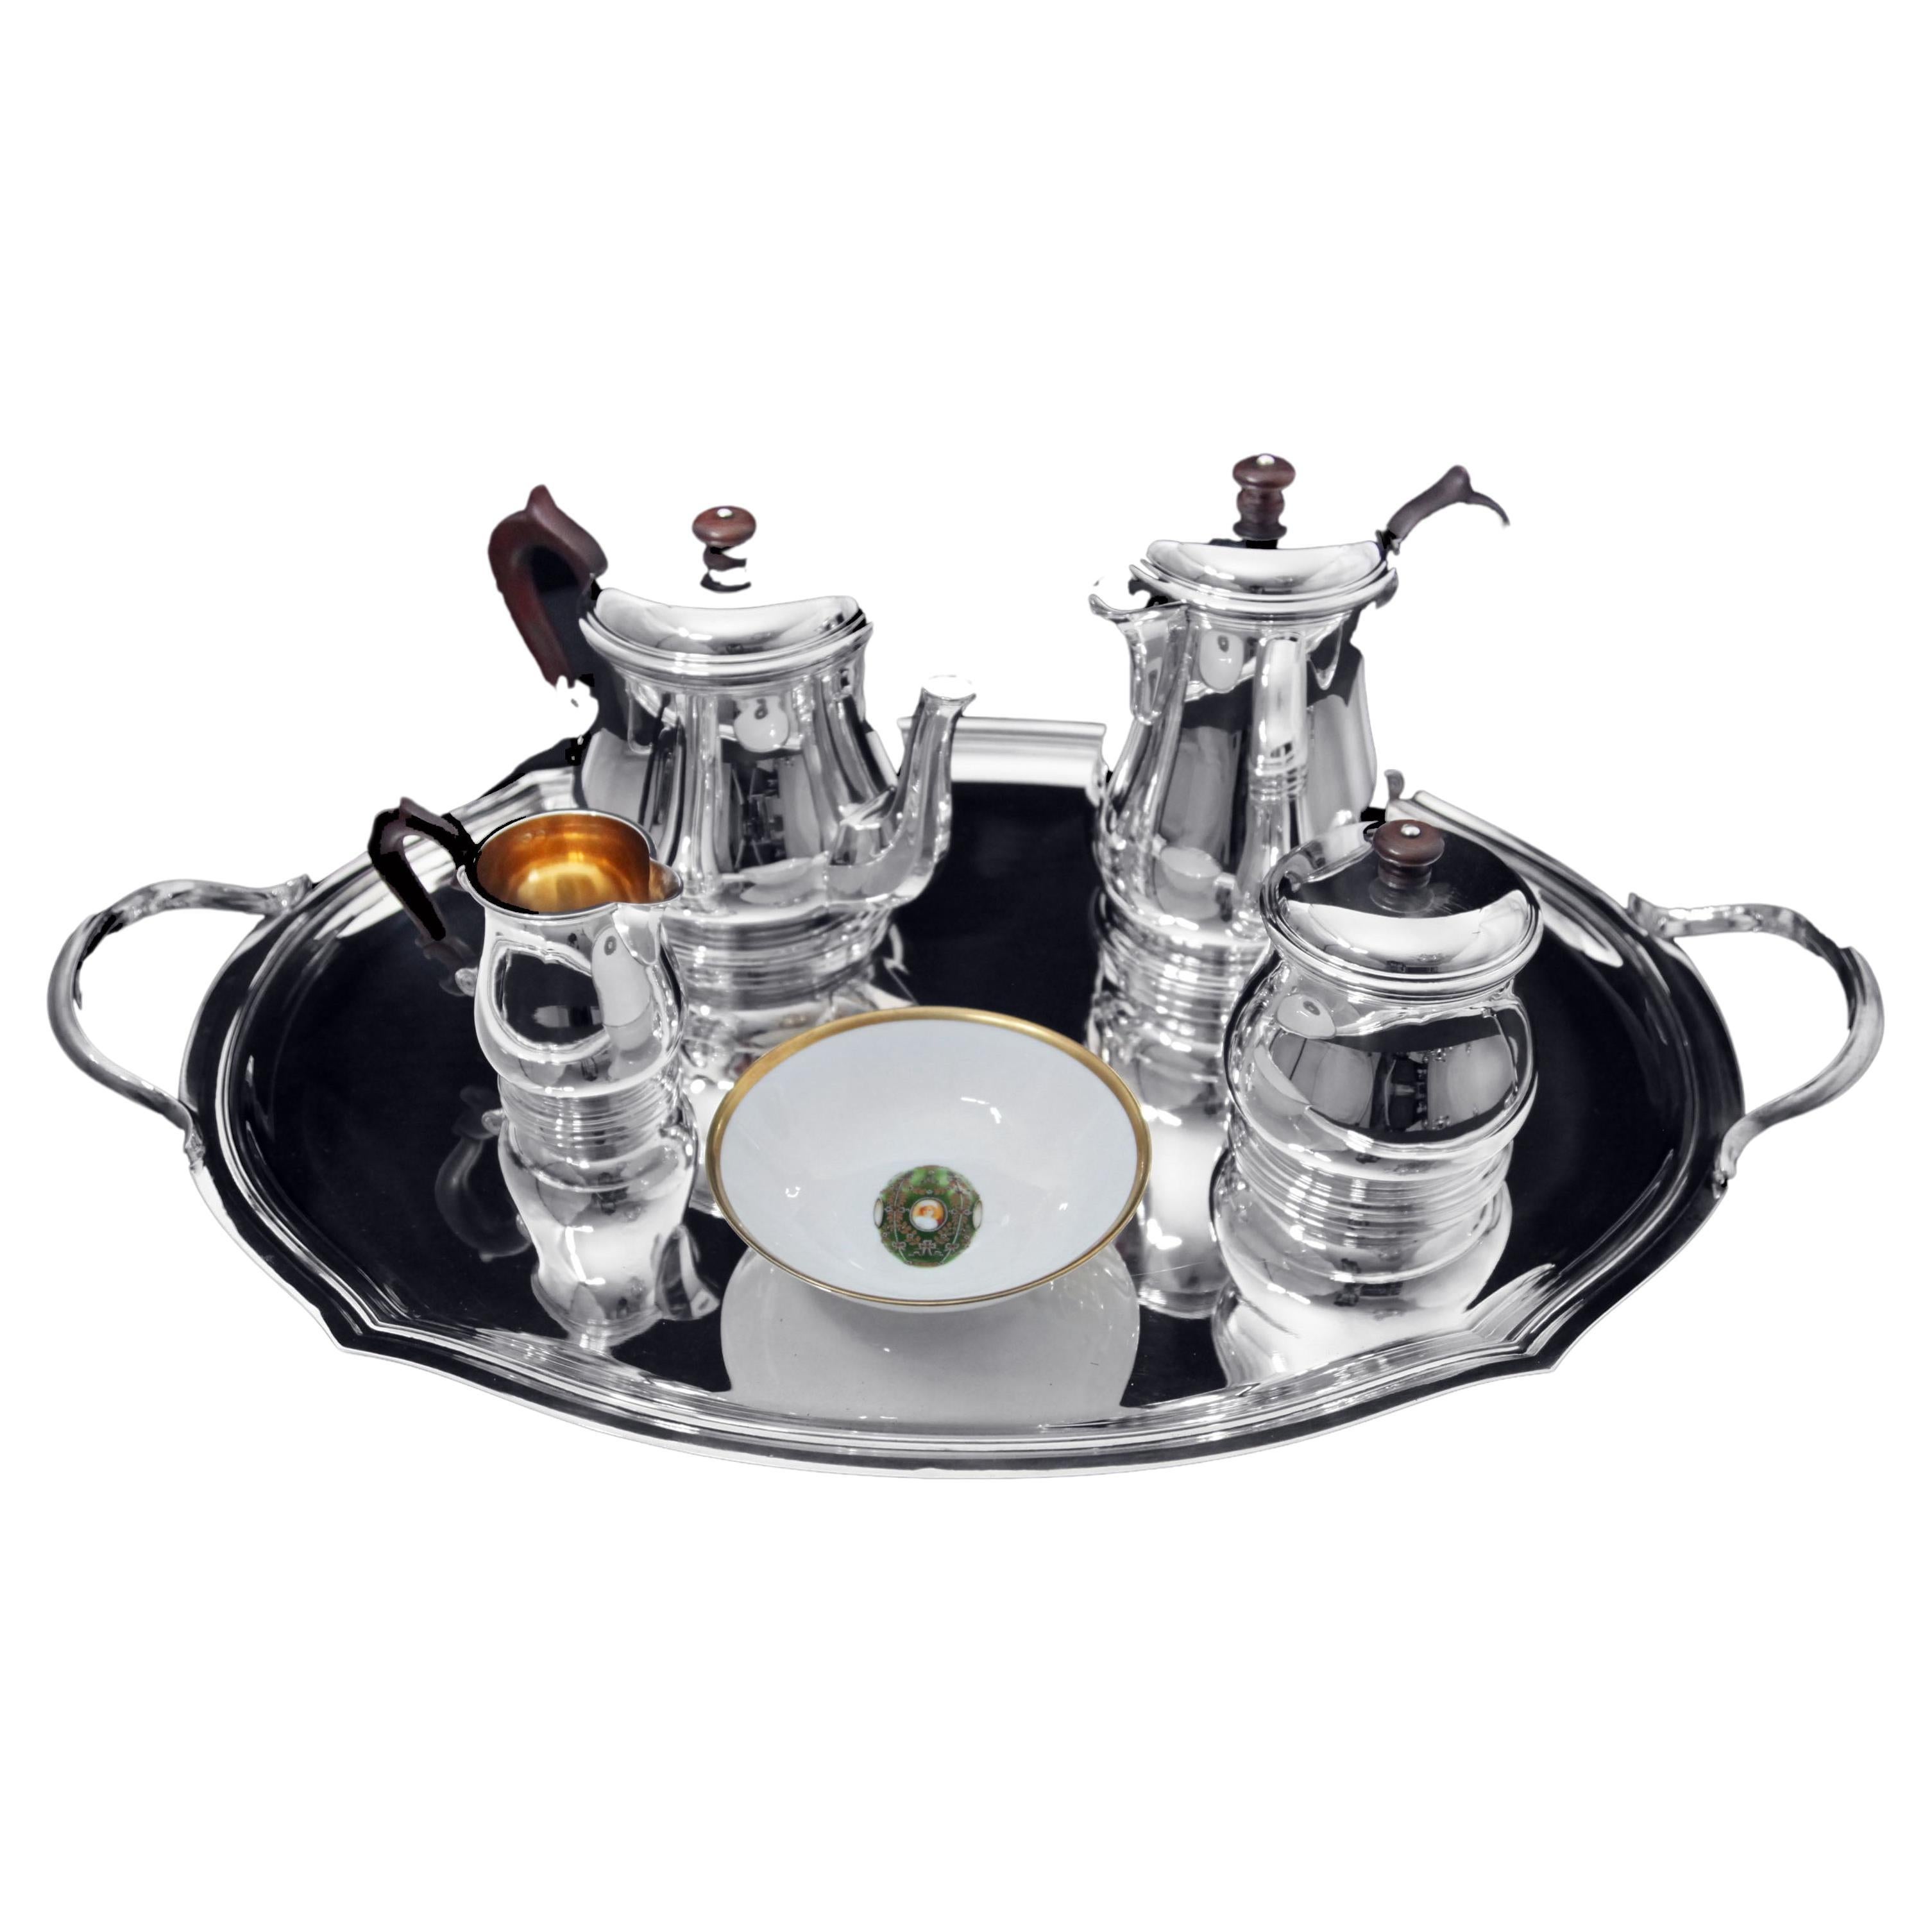 Puiforcat (Hermes), Christofle, Faberge - 5pc. French 950 Sterling Tea Set For Sale